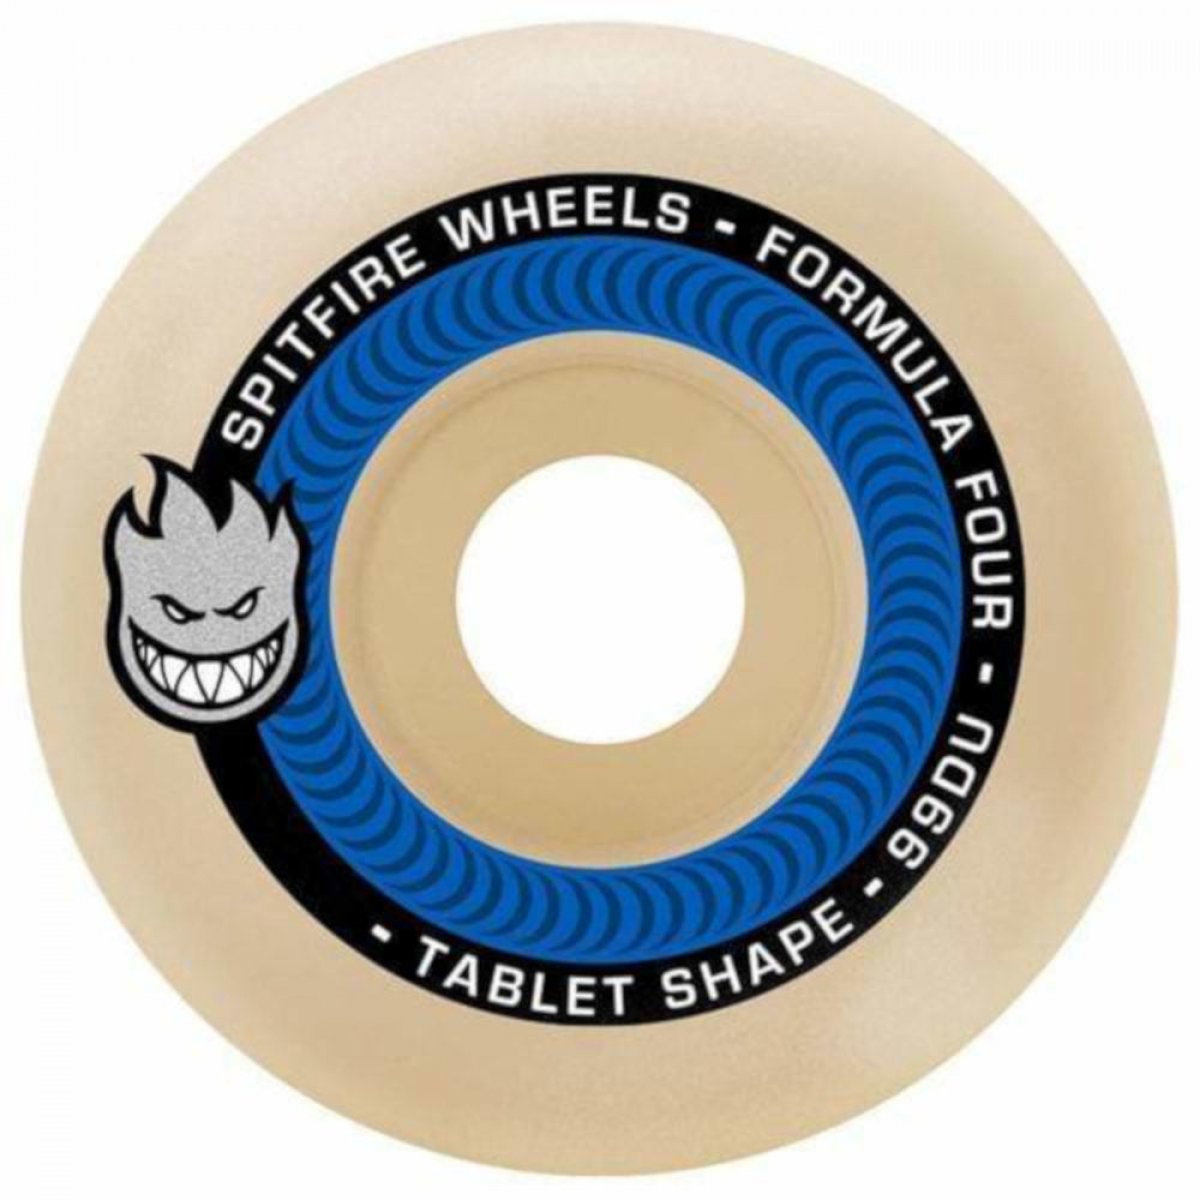 Spitfire Wheels ruote professionali Formula four TABLETS 99a pack 4 pz Spitfire Ruote professionali skateboard